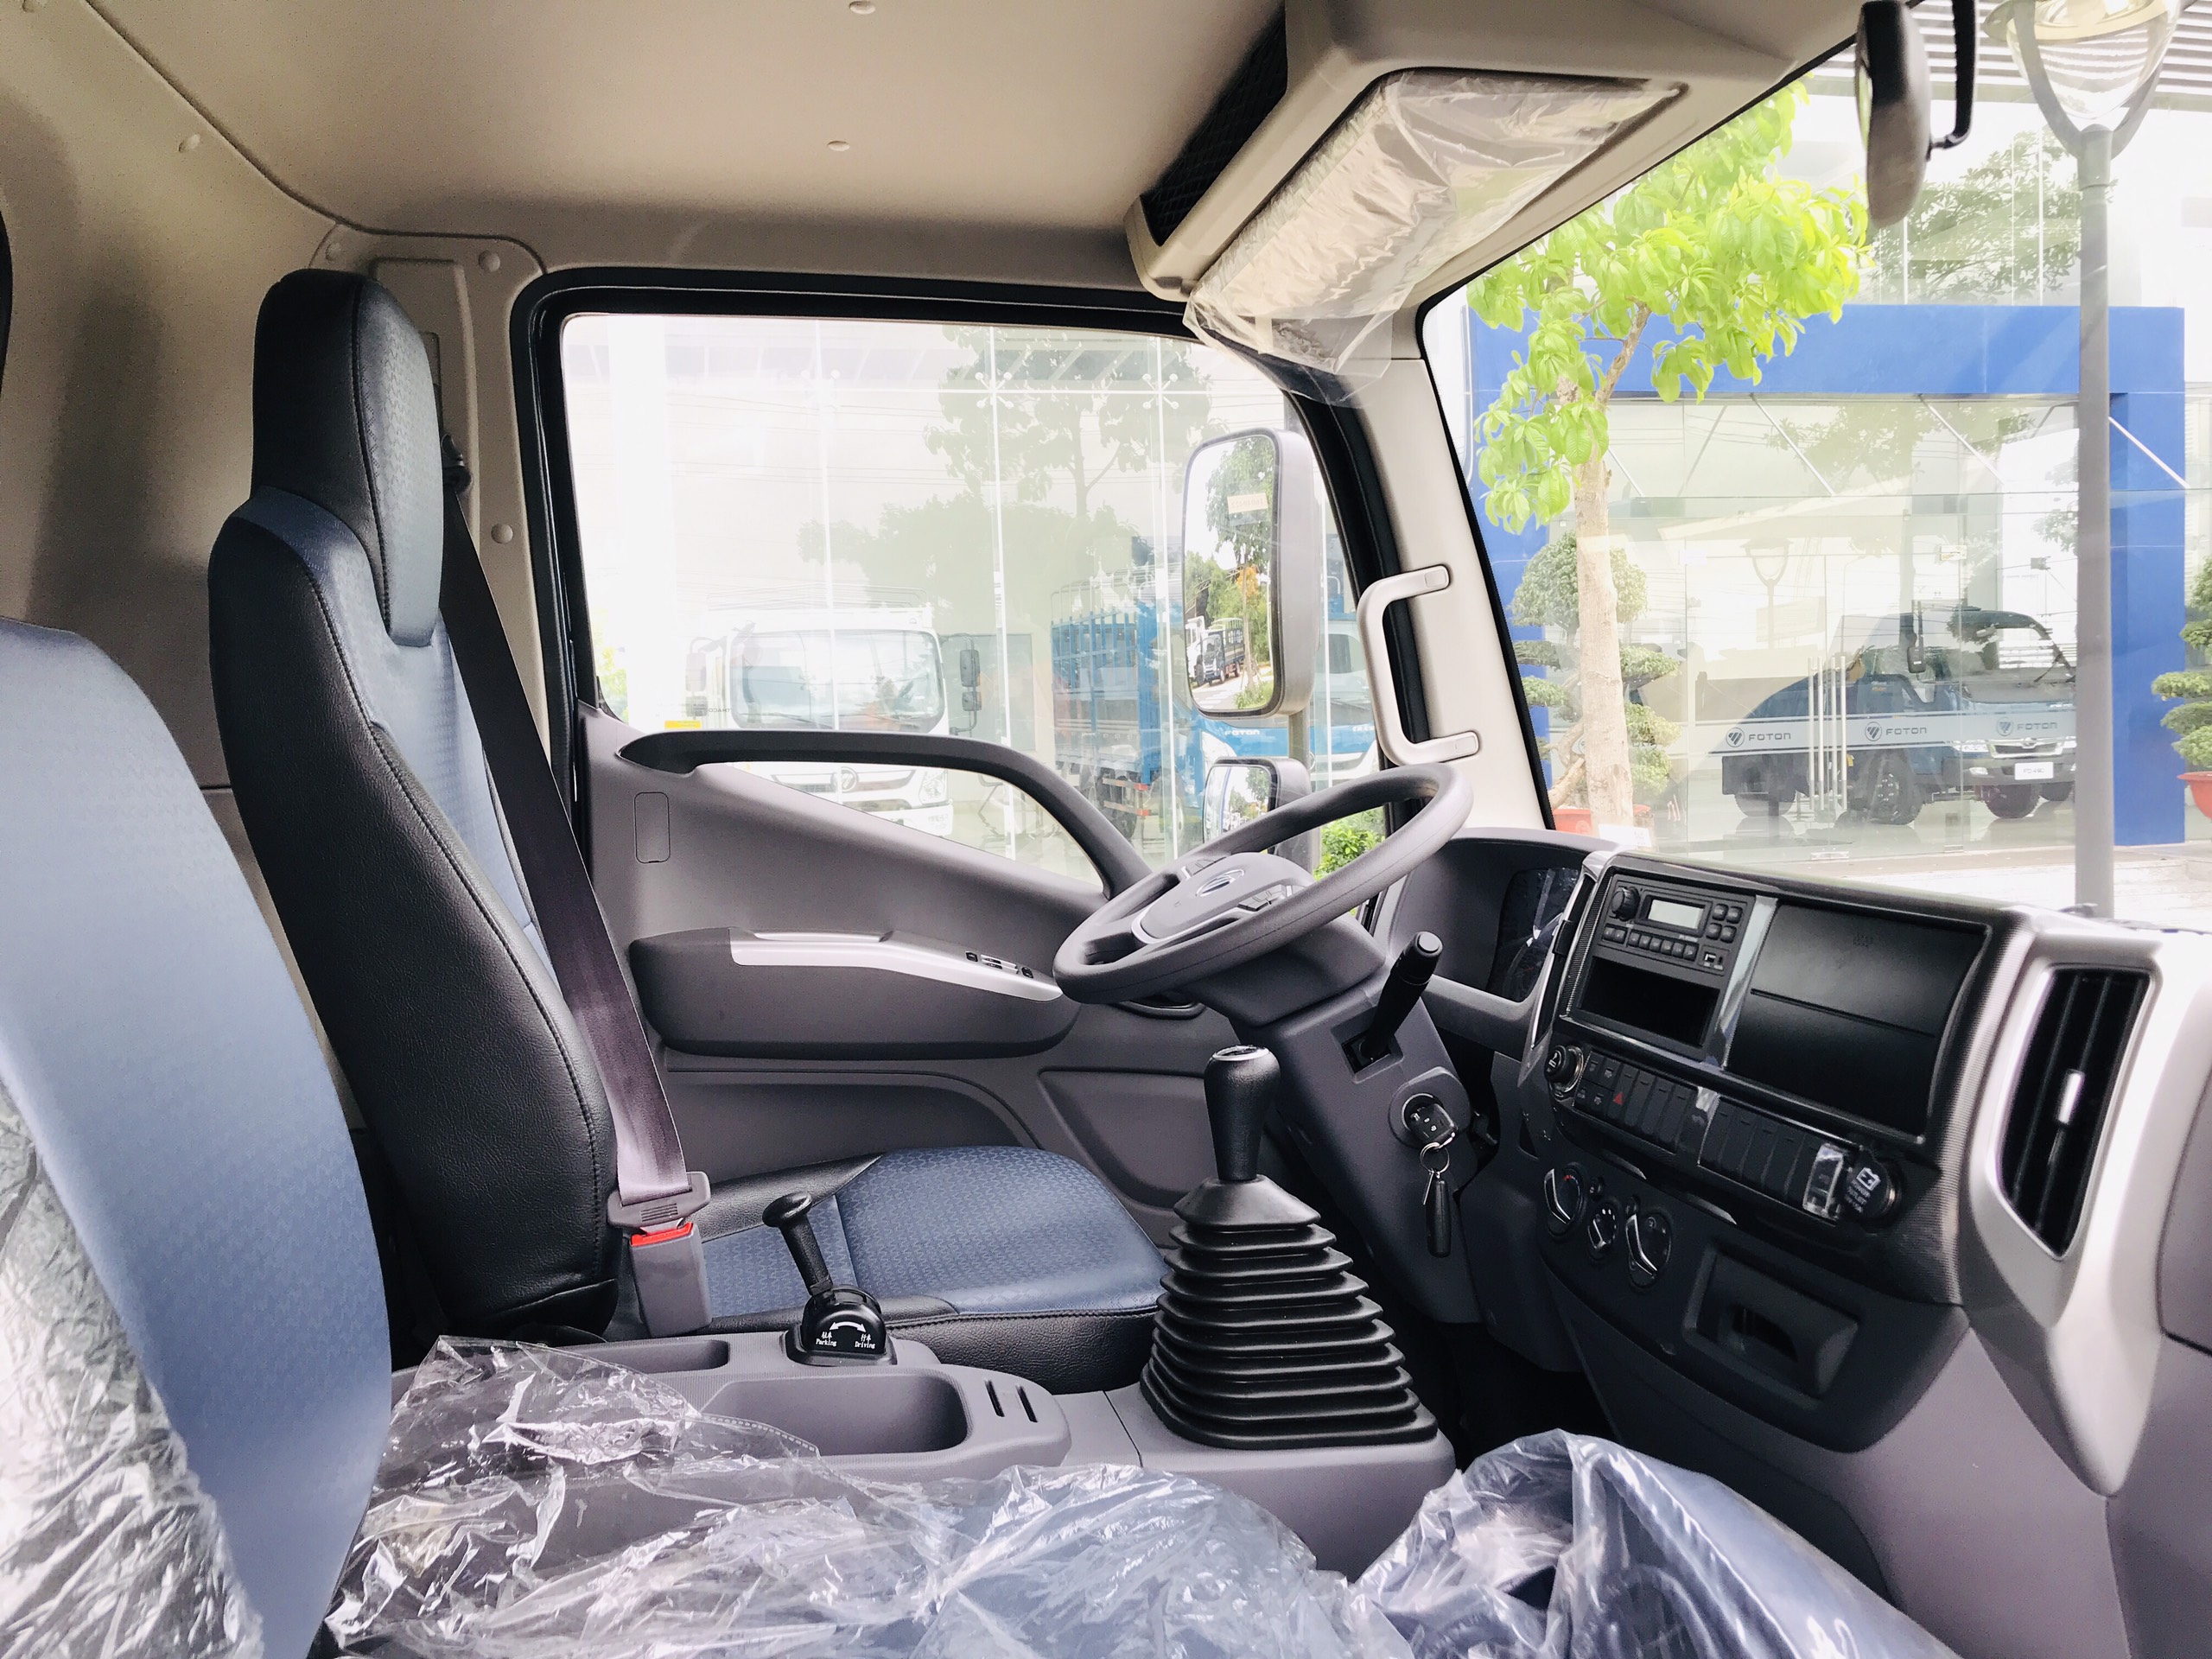 nội thất khoang cabin của xe tải Thaco Ollin S720